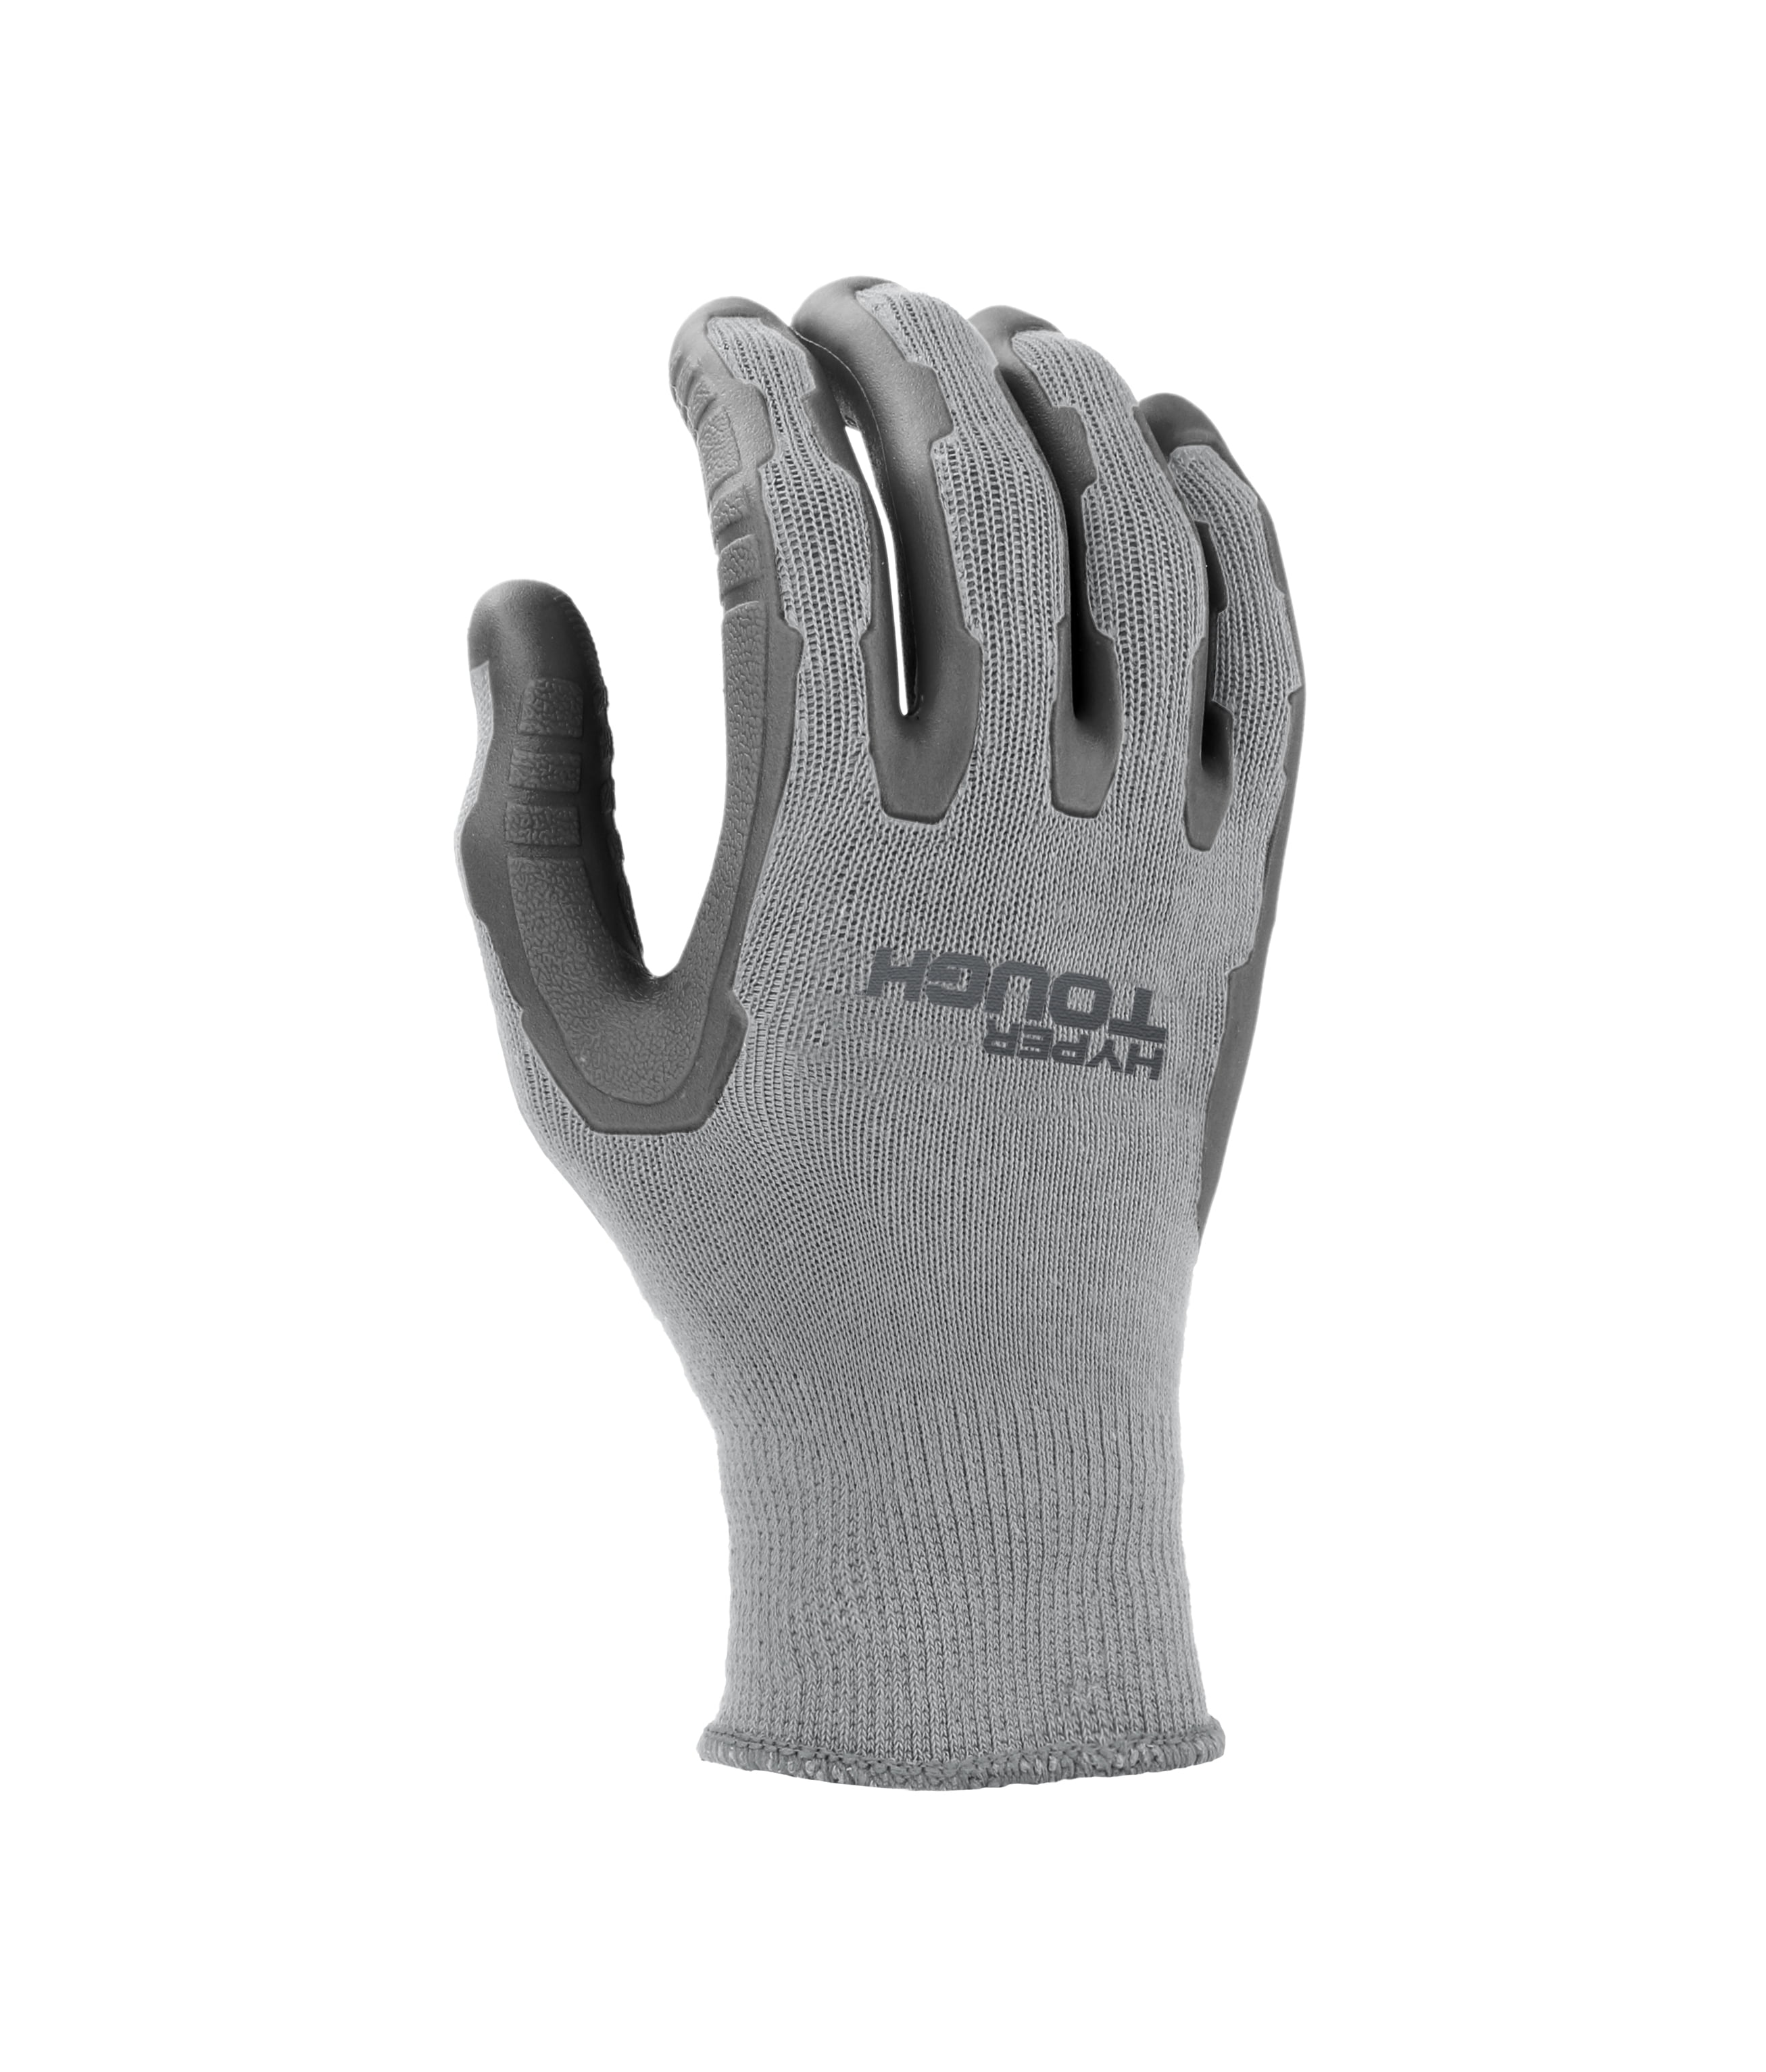 Latex Coated Medium Size Tough Grip Gardening Gloves 